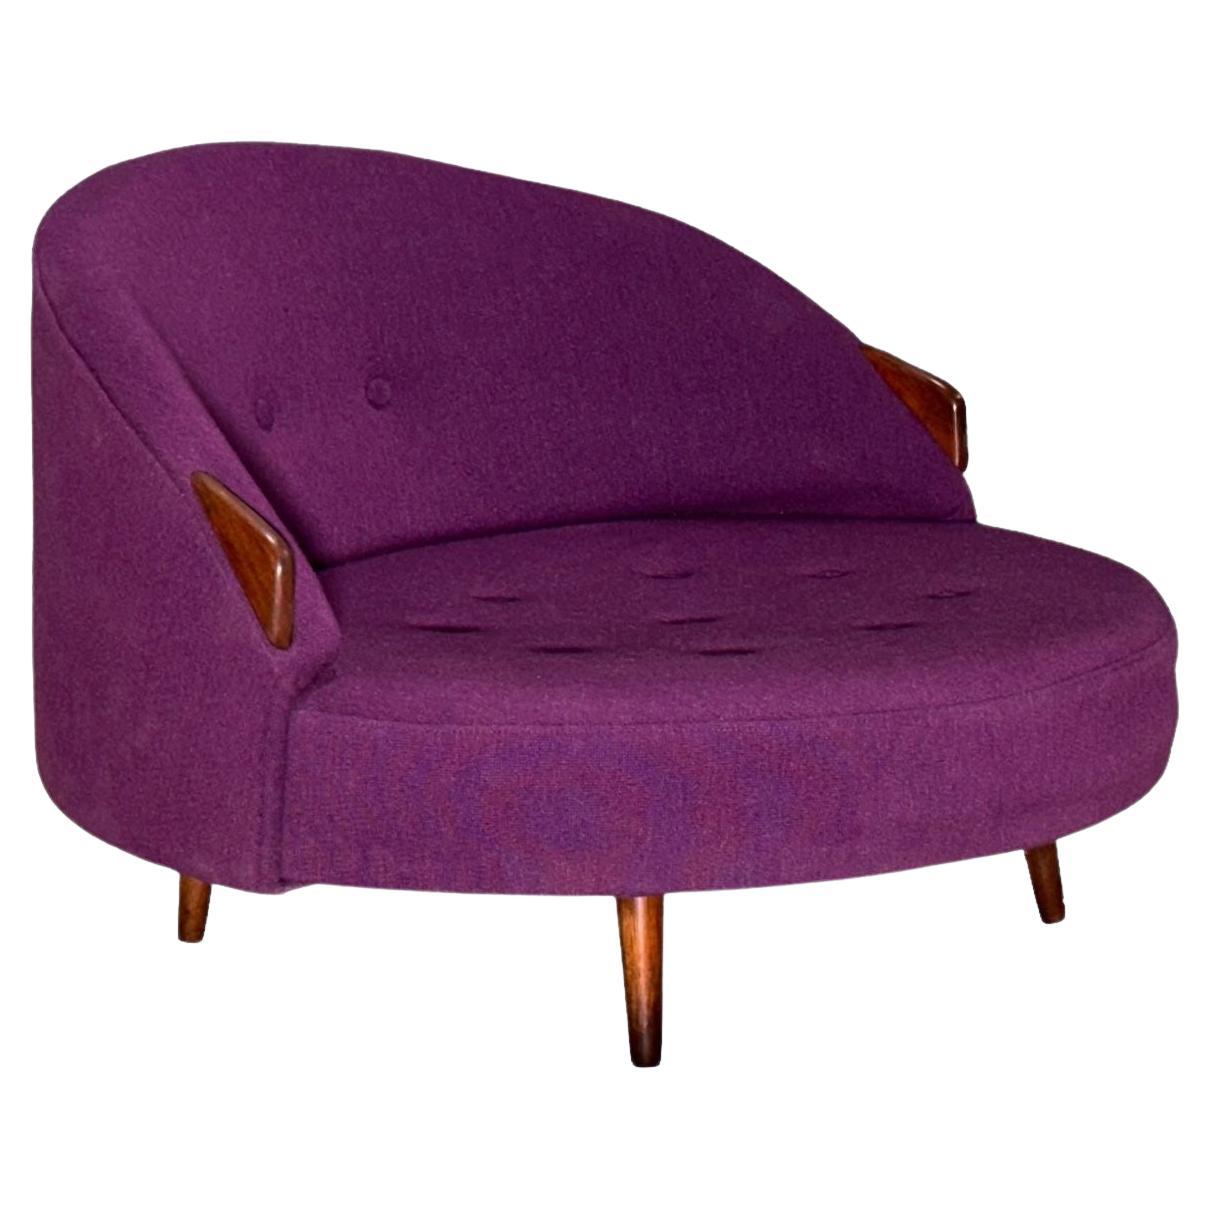 Adrian Pearsall Havana Lounge Chair, 1970 For Sale